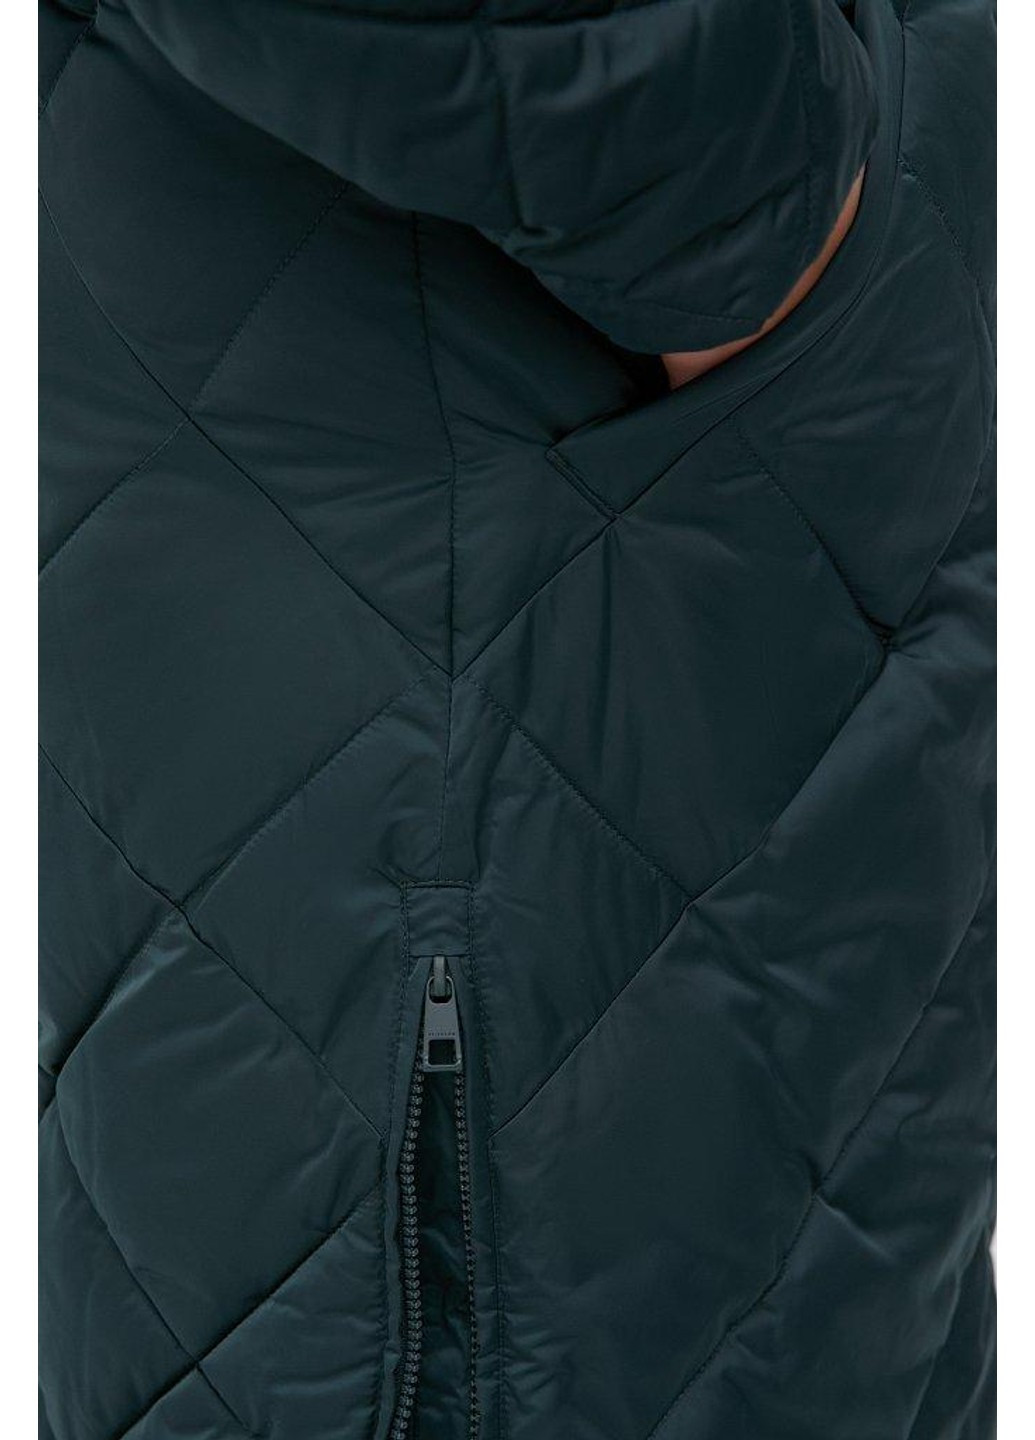 Зелена зимня куртка fwb160130-530 Finn Flare